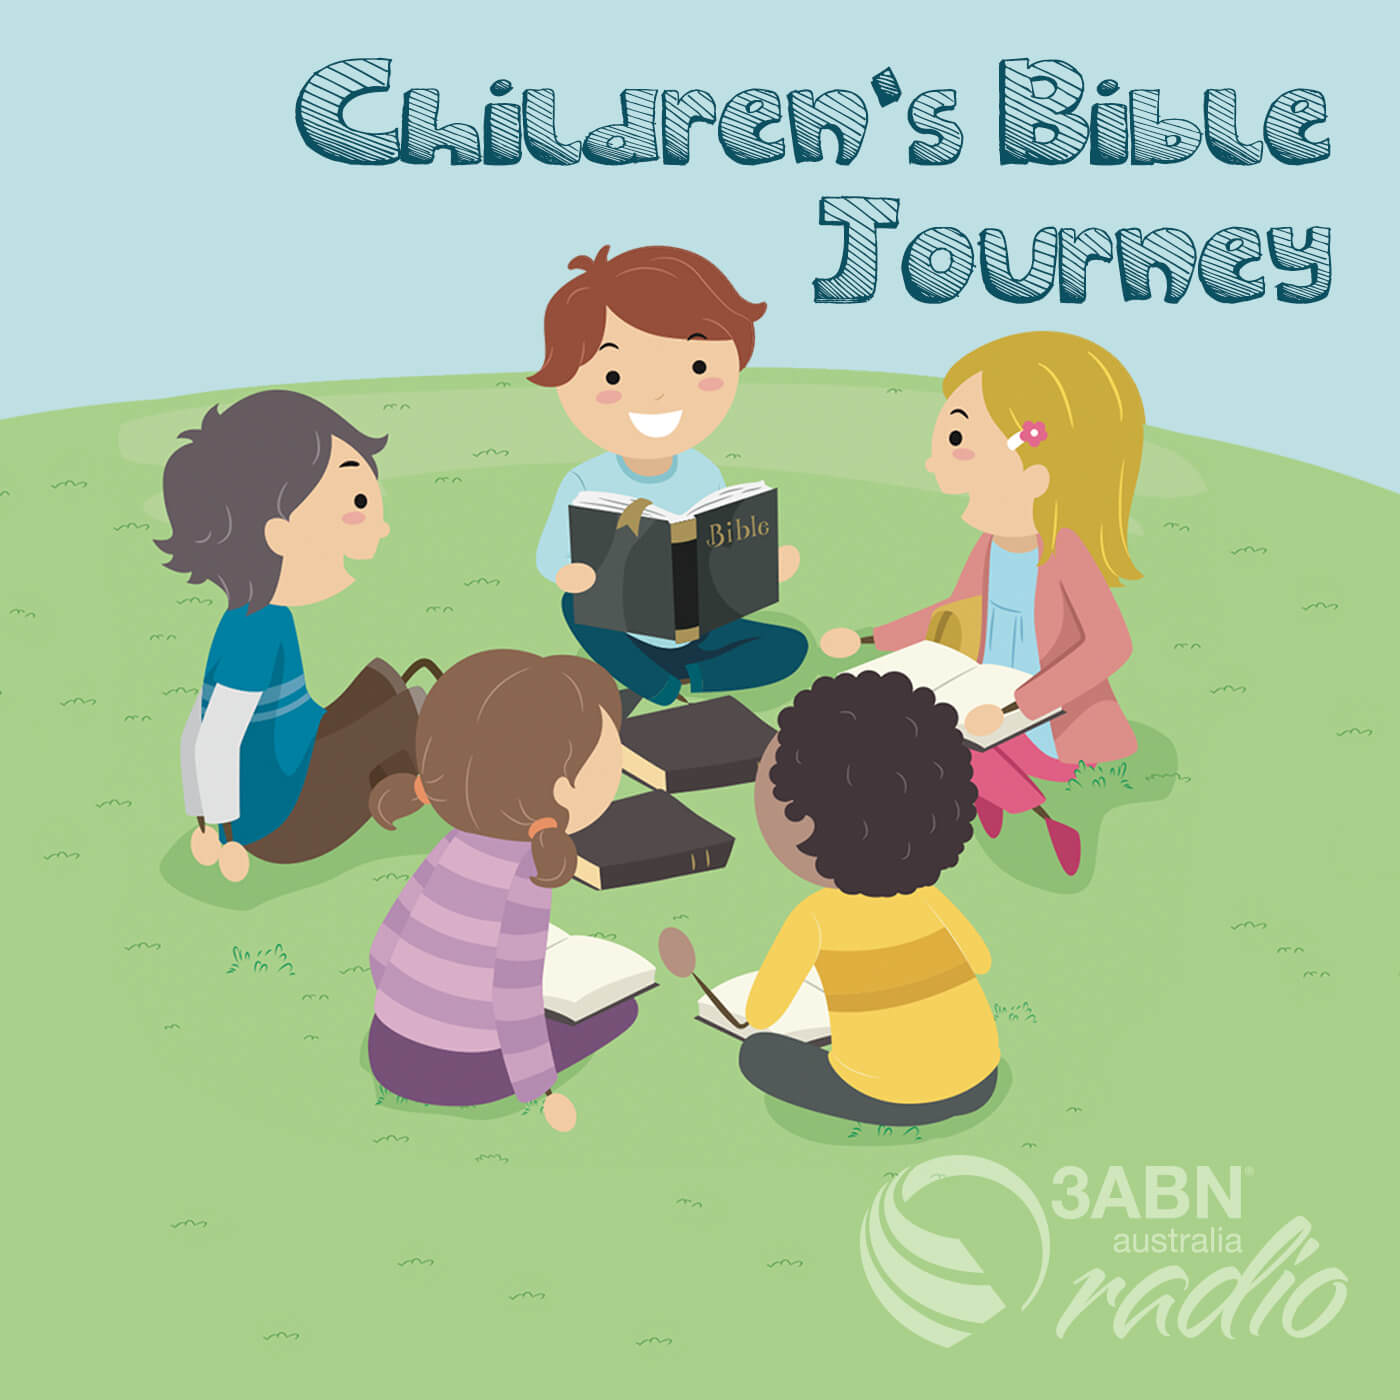 Children's Bible Journey - 2146